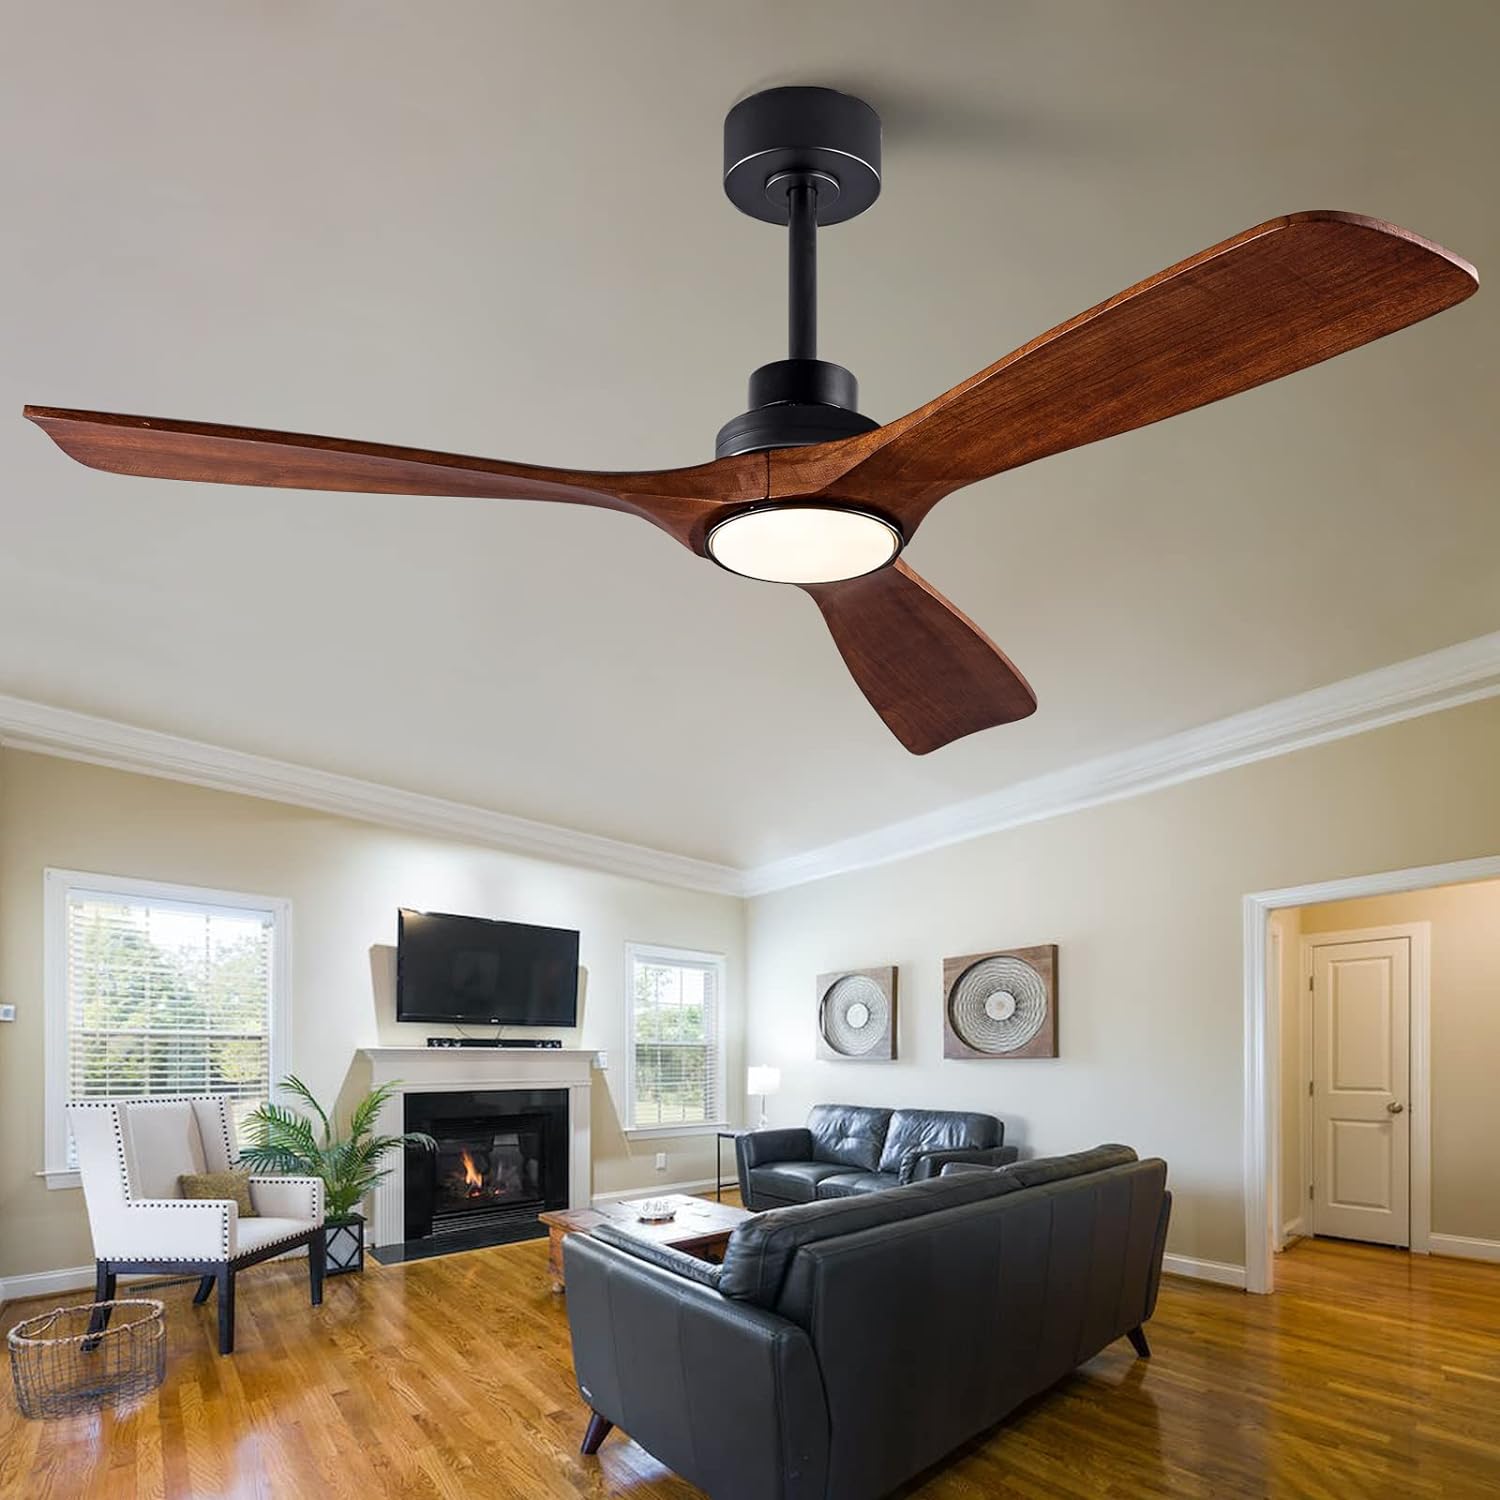 52 Wood Ceiling Fan with Lights Remote Control,Quiet DC Motor 3 Blade Ceiling Fans for Patio Living Room, Bedroom, Office,Indoor Outdoor(Black+Dark Walnut)